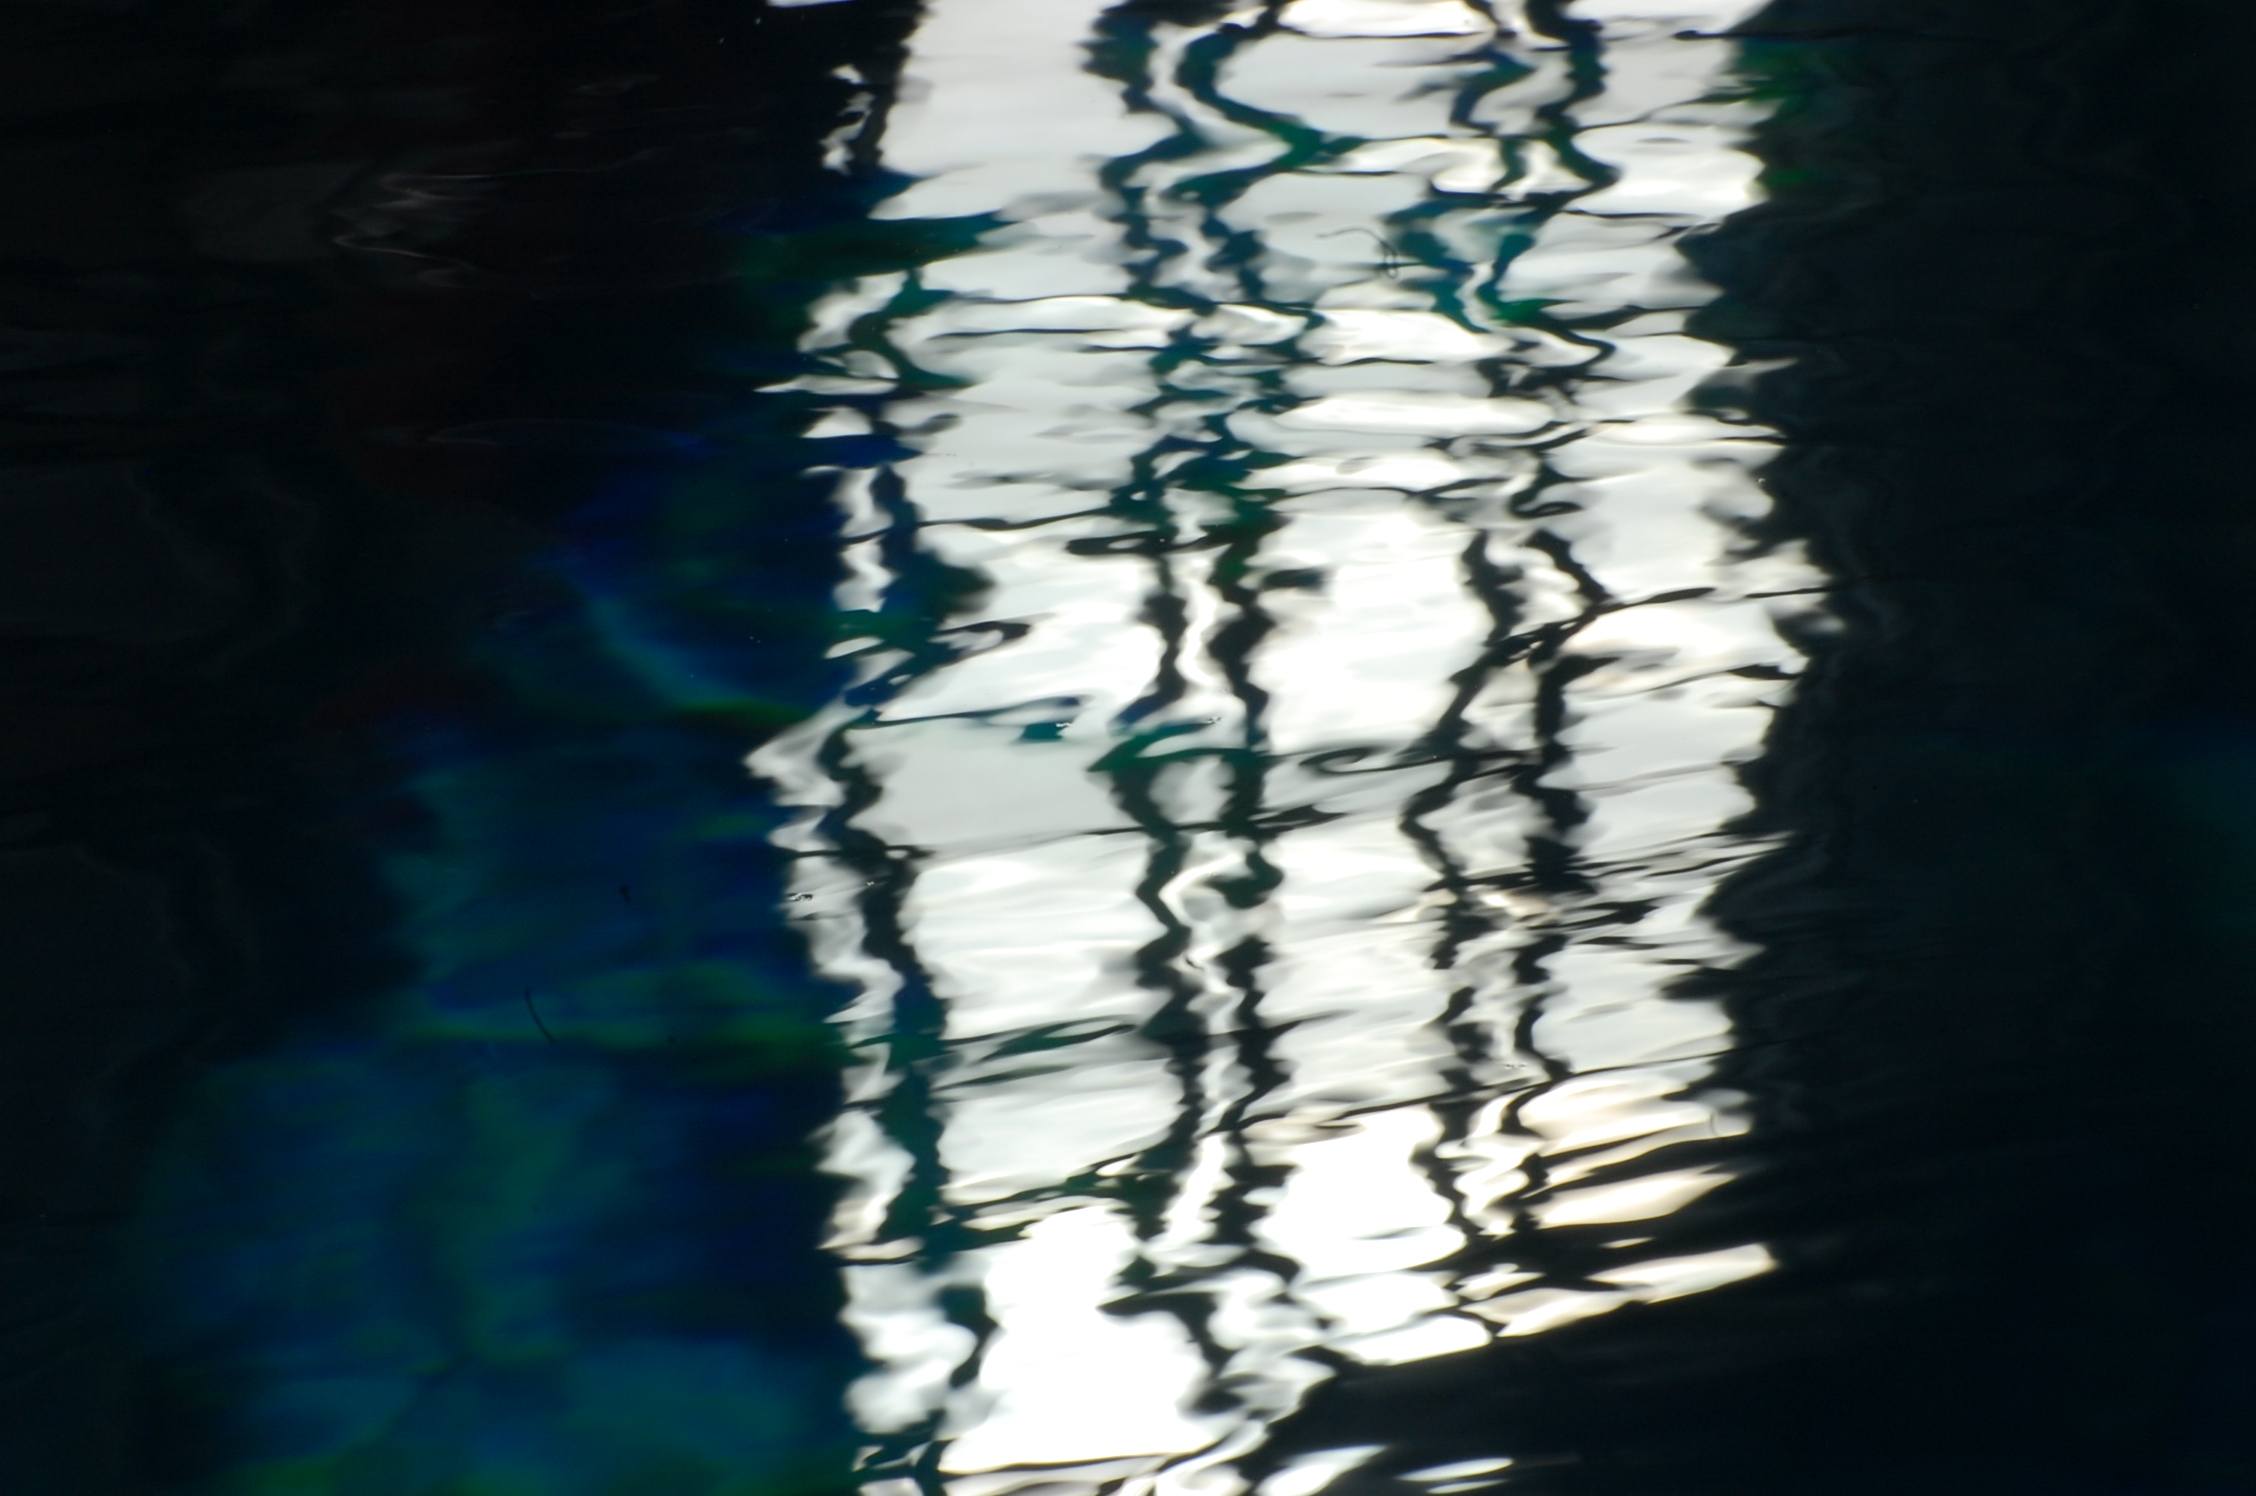 VMC Pool Ke Shower Me Ek Elderly Man Ki Hui Death - Indian Swimming News